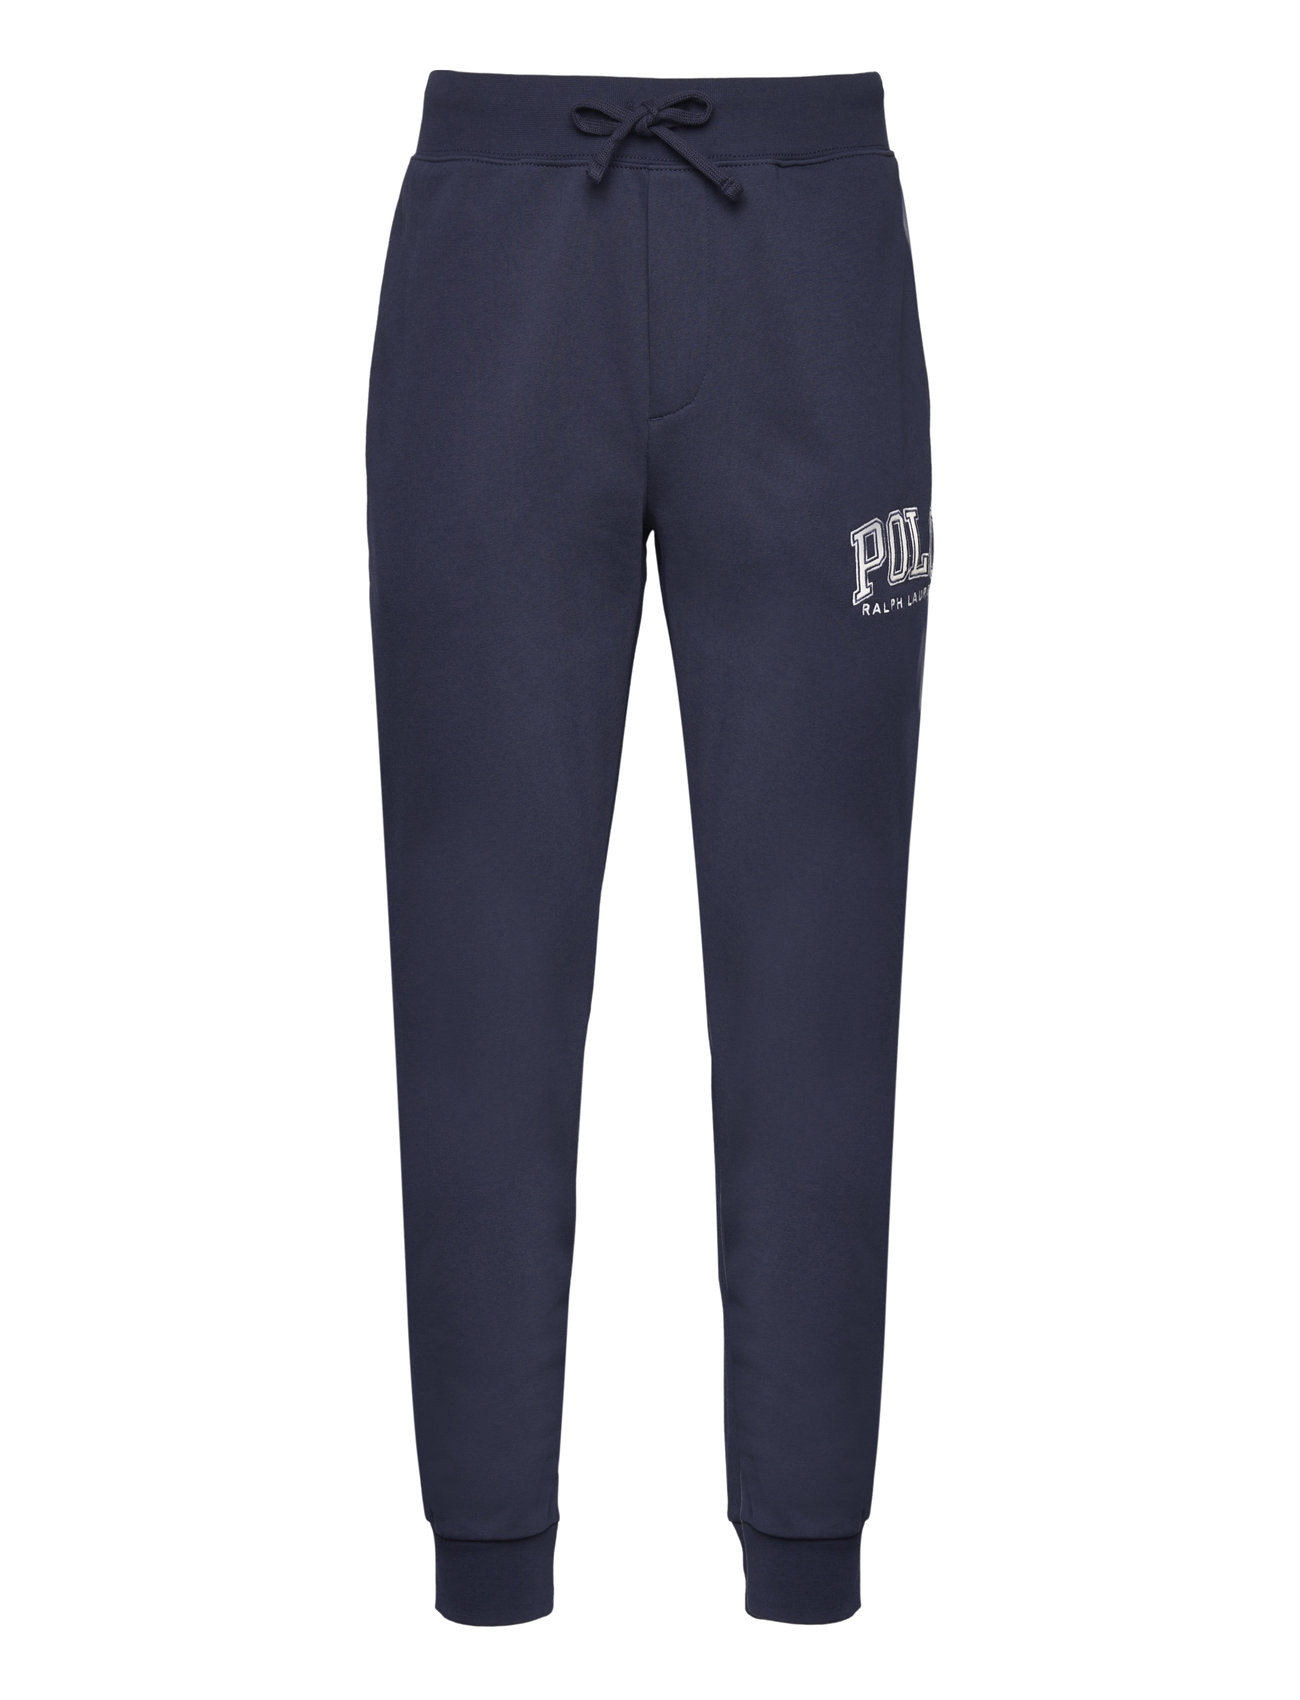 The Rl Fleece Logo Jogger Pant Bottoms Sweatpants Navy Polo Ralph Lauren